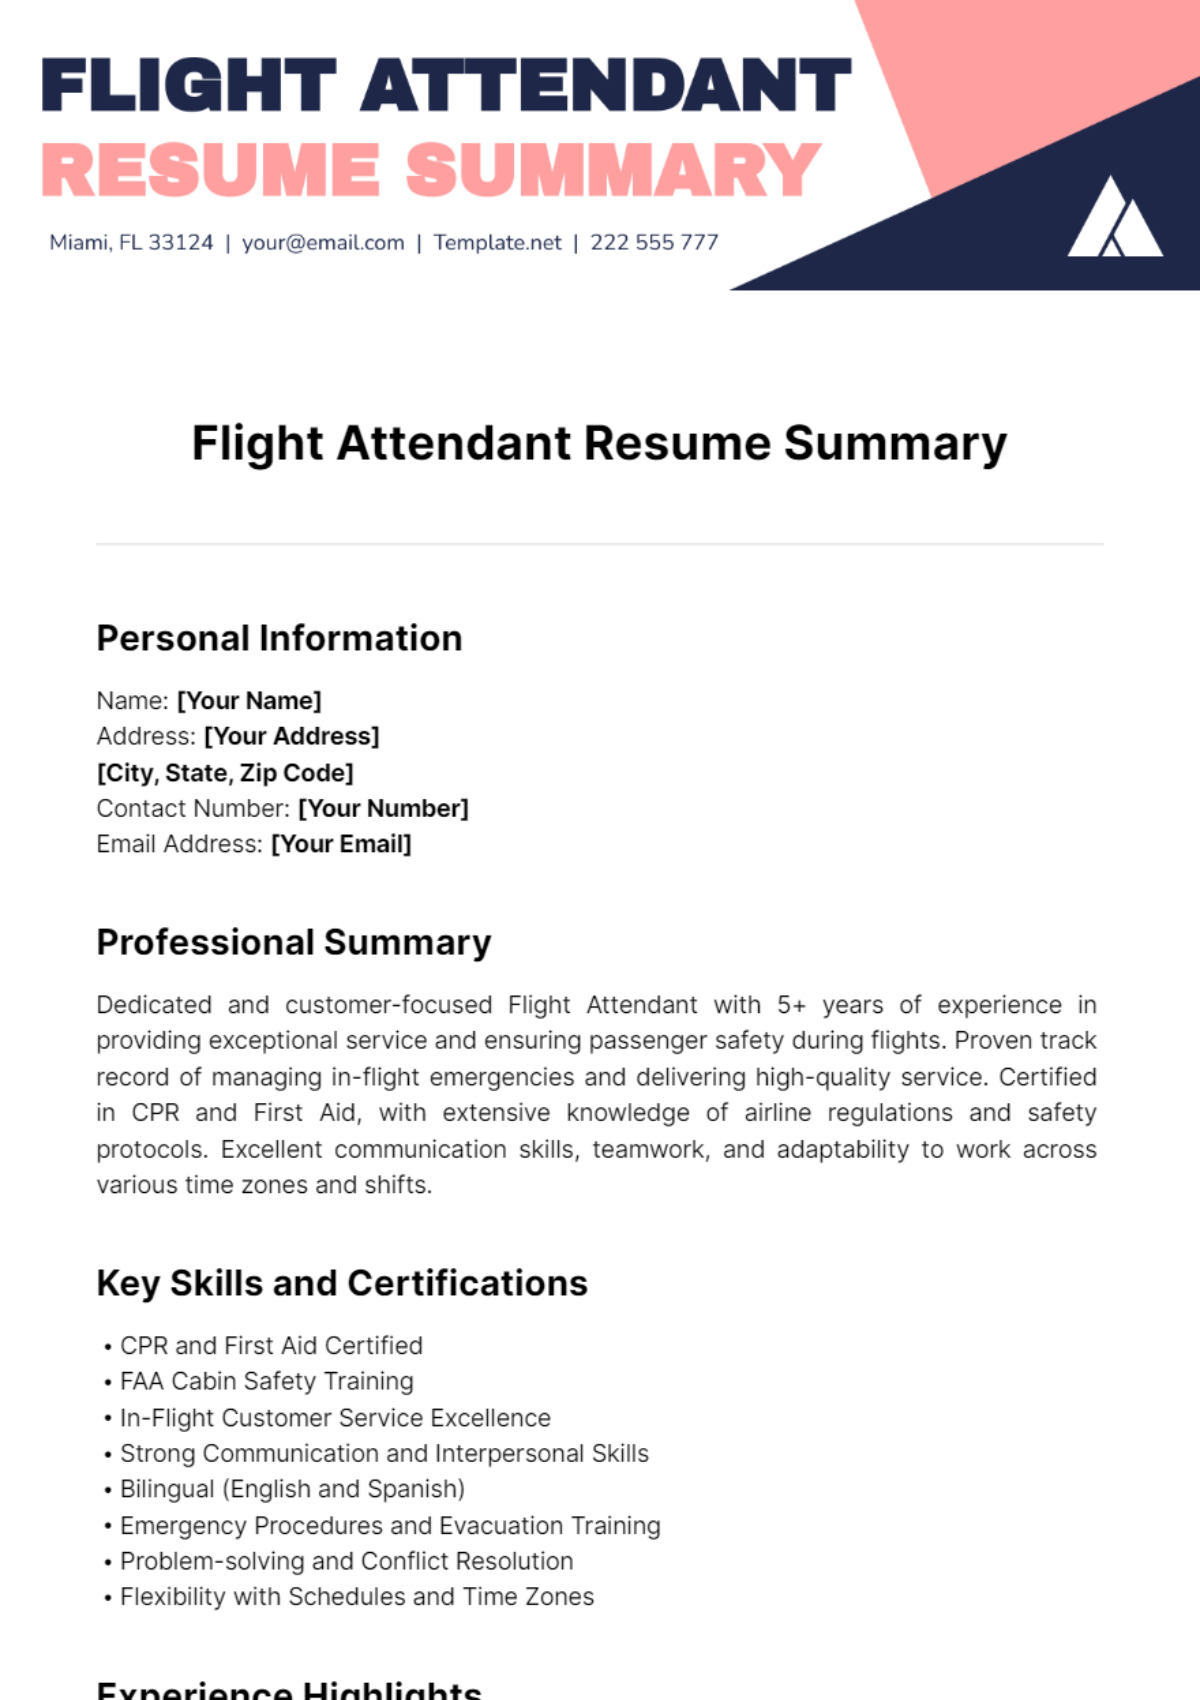 Free Flight Attendant Resume Summary Template